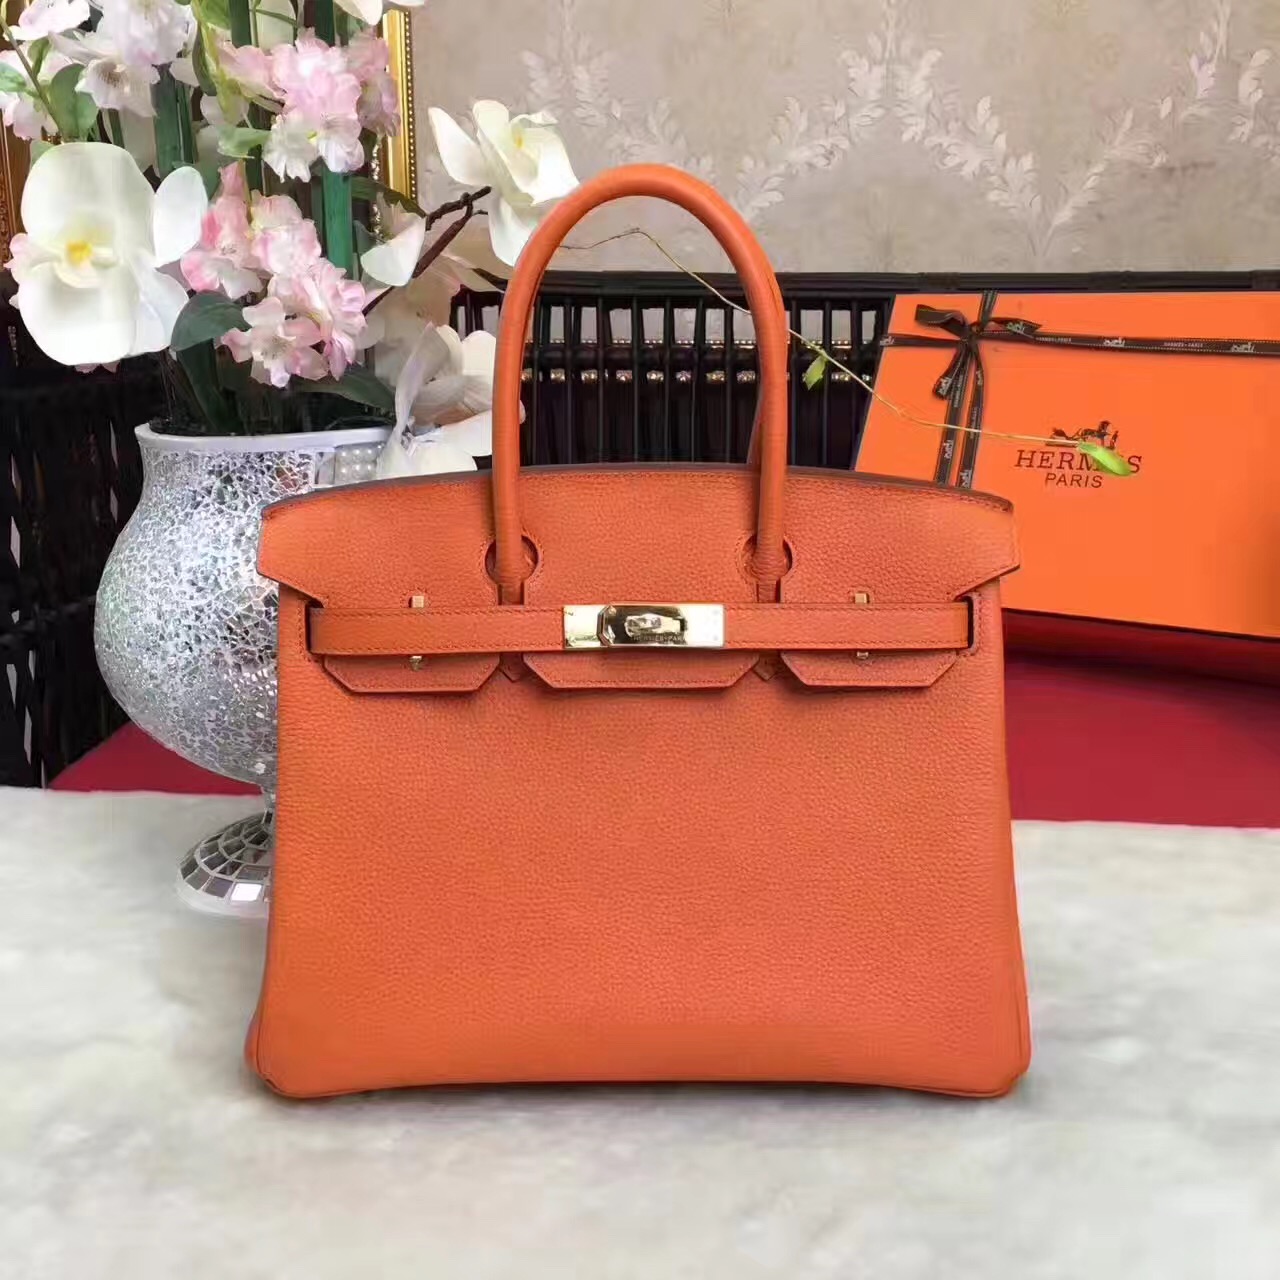 Hermes Birkin top leather orange handbags